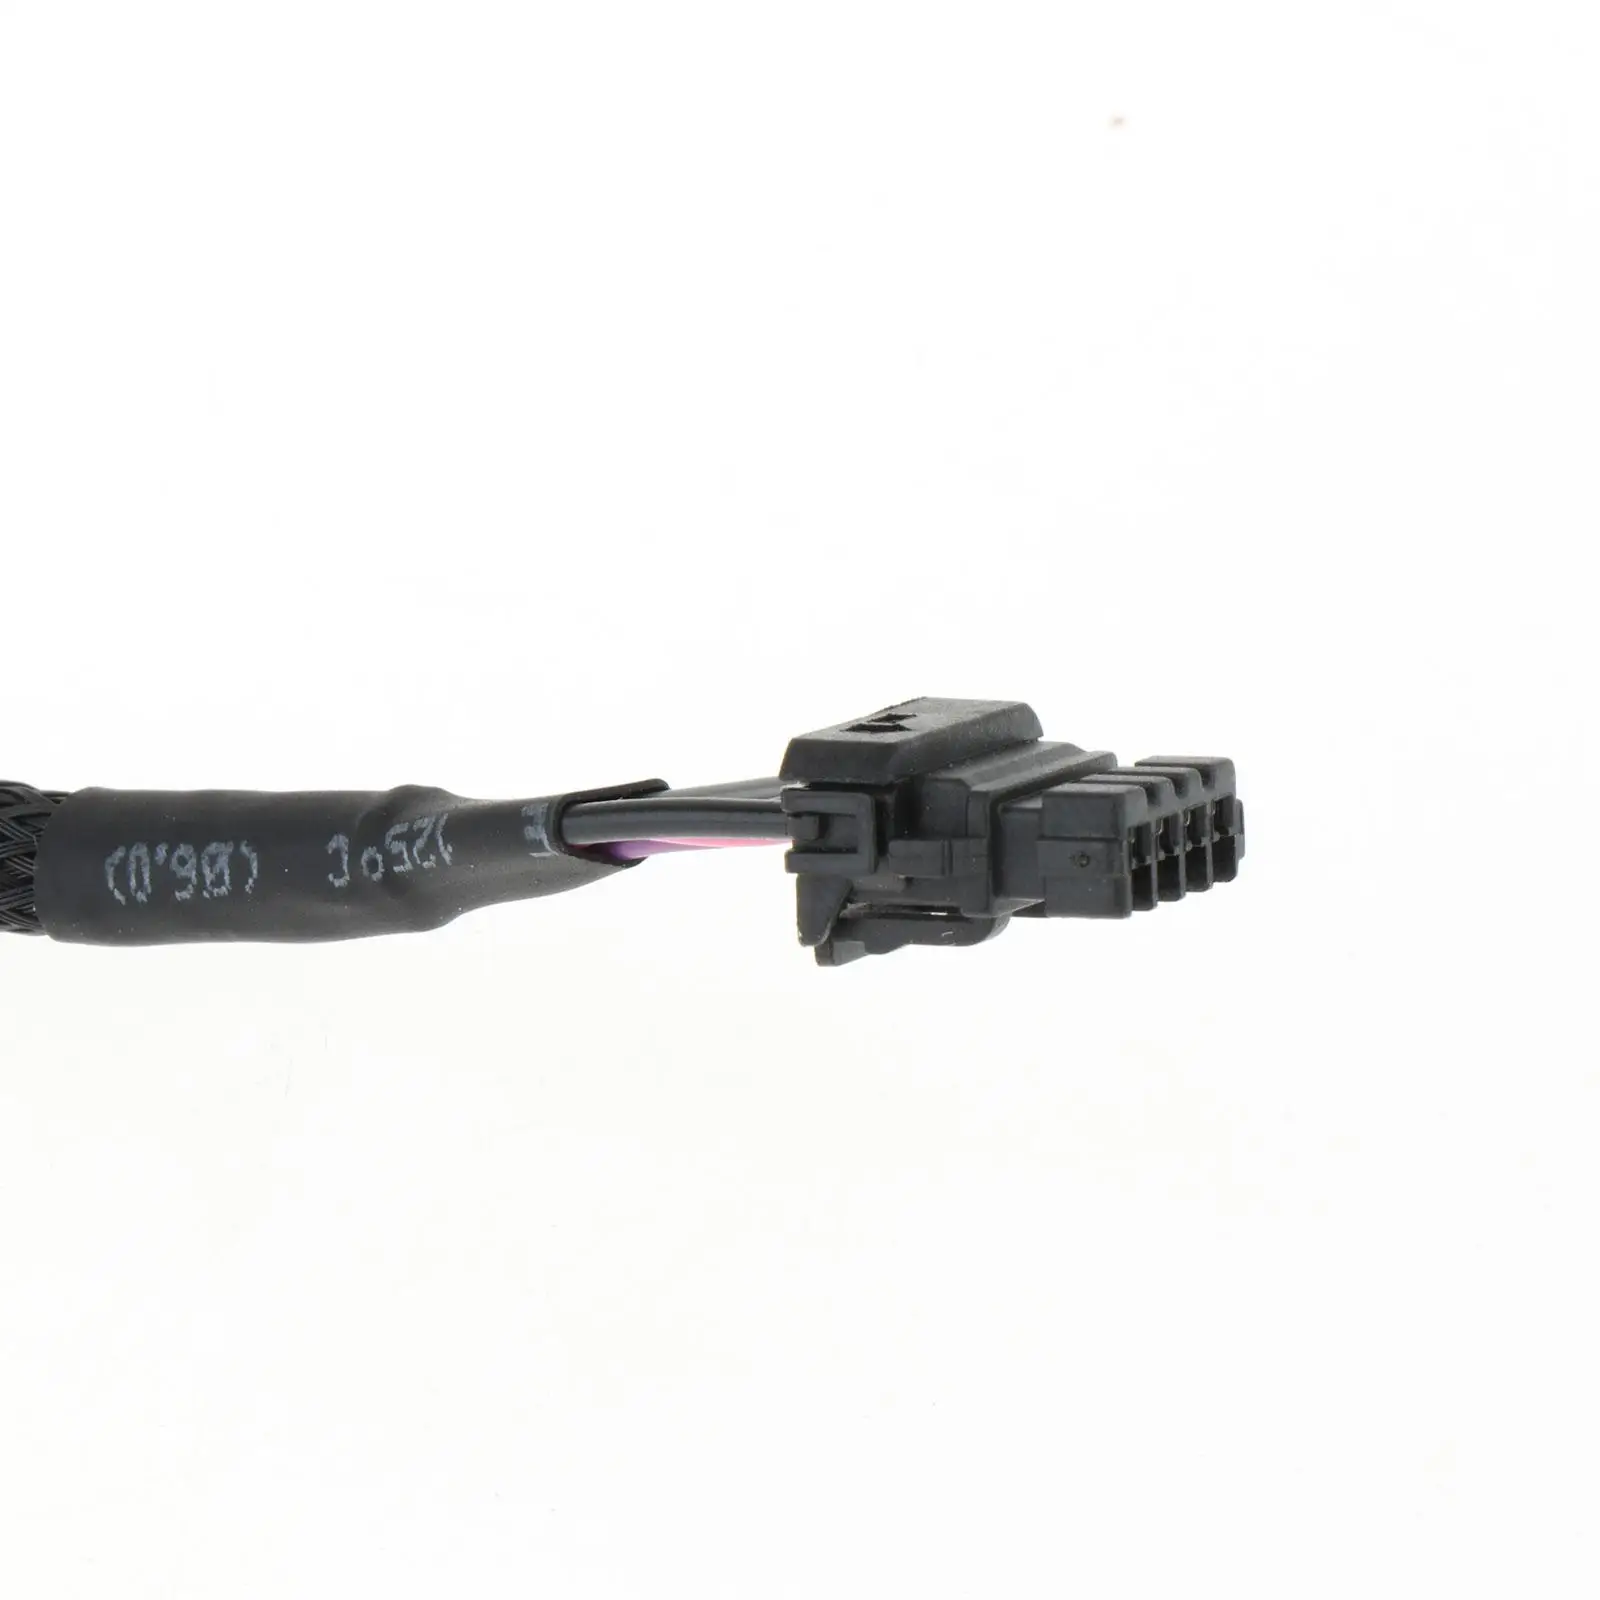 Bus Efi Y Splitter Cable 558-465 Replace Parts Bus Efi Y Splitter Cable Harness for EFI